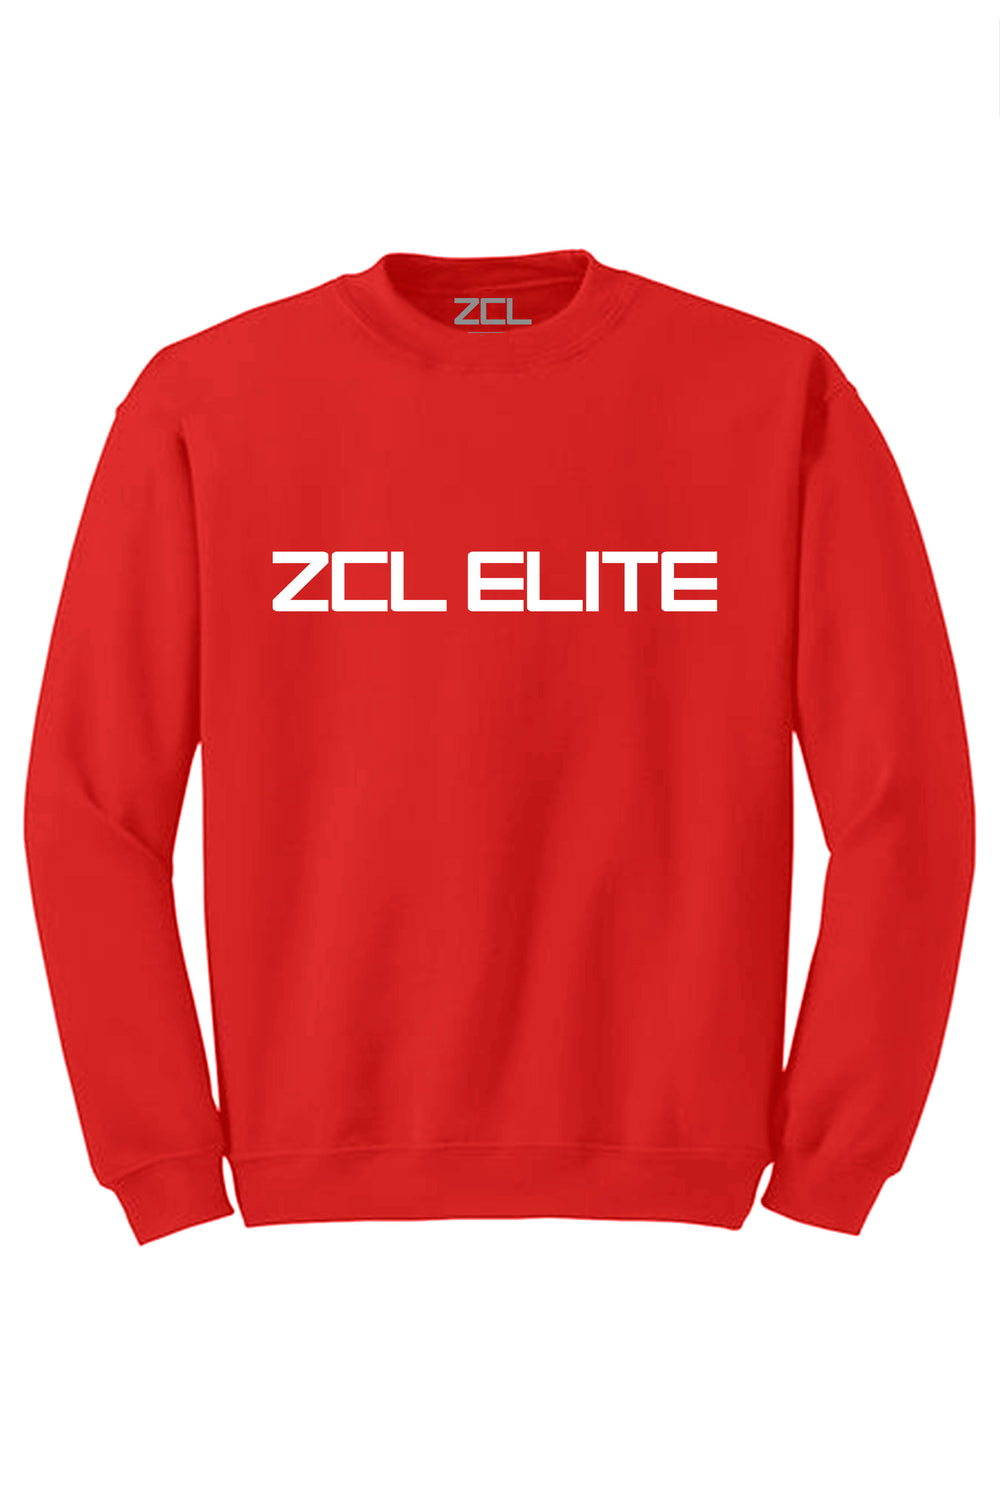 ZCL Elite Crewneck Sweatshirt (White Logo) - Zamage